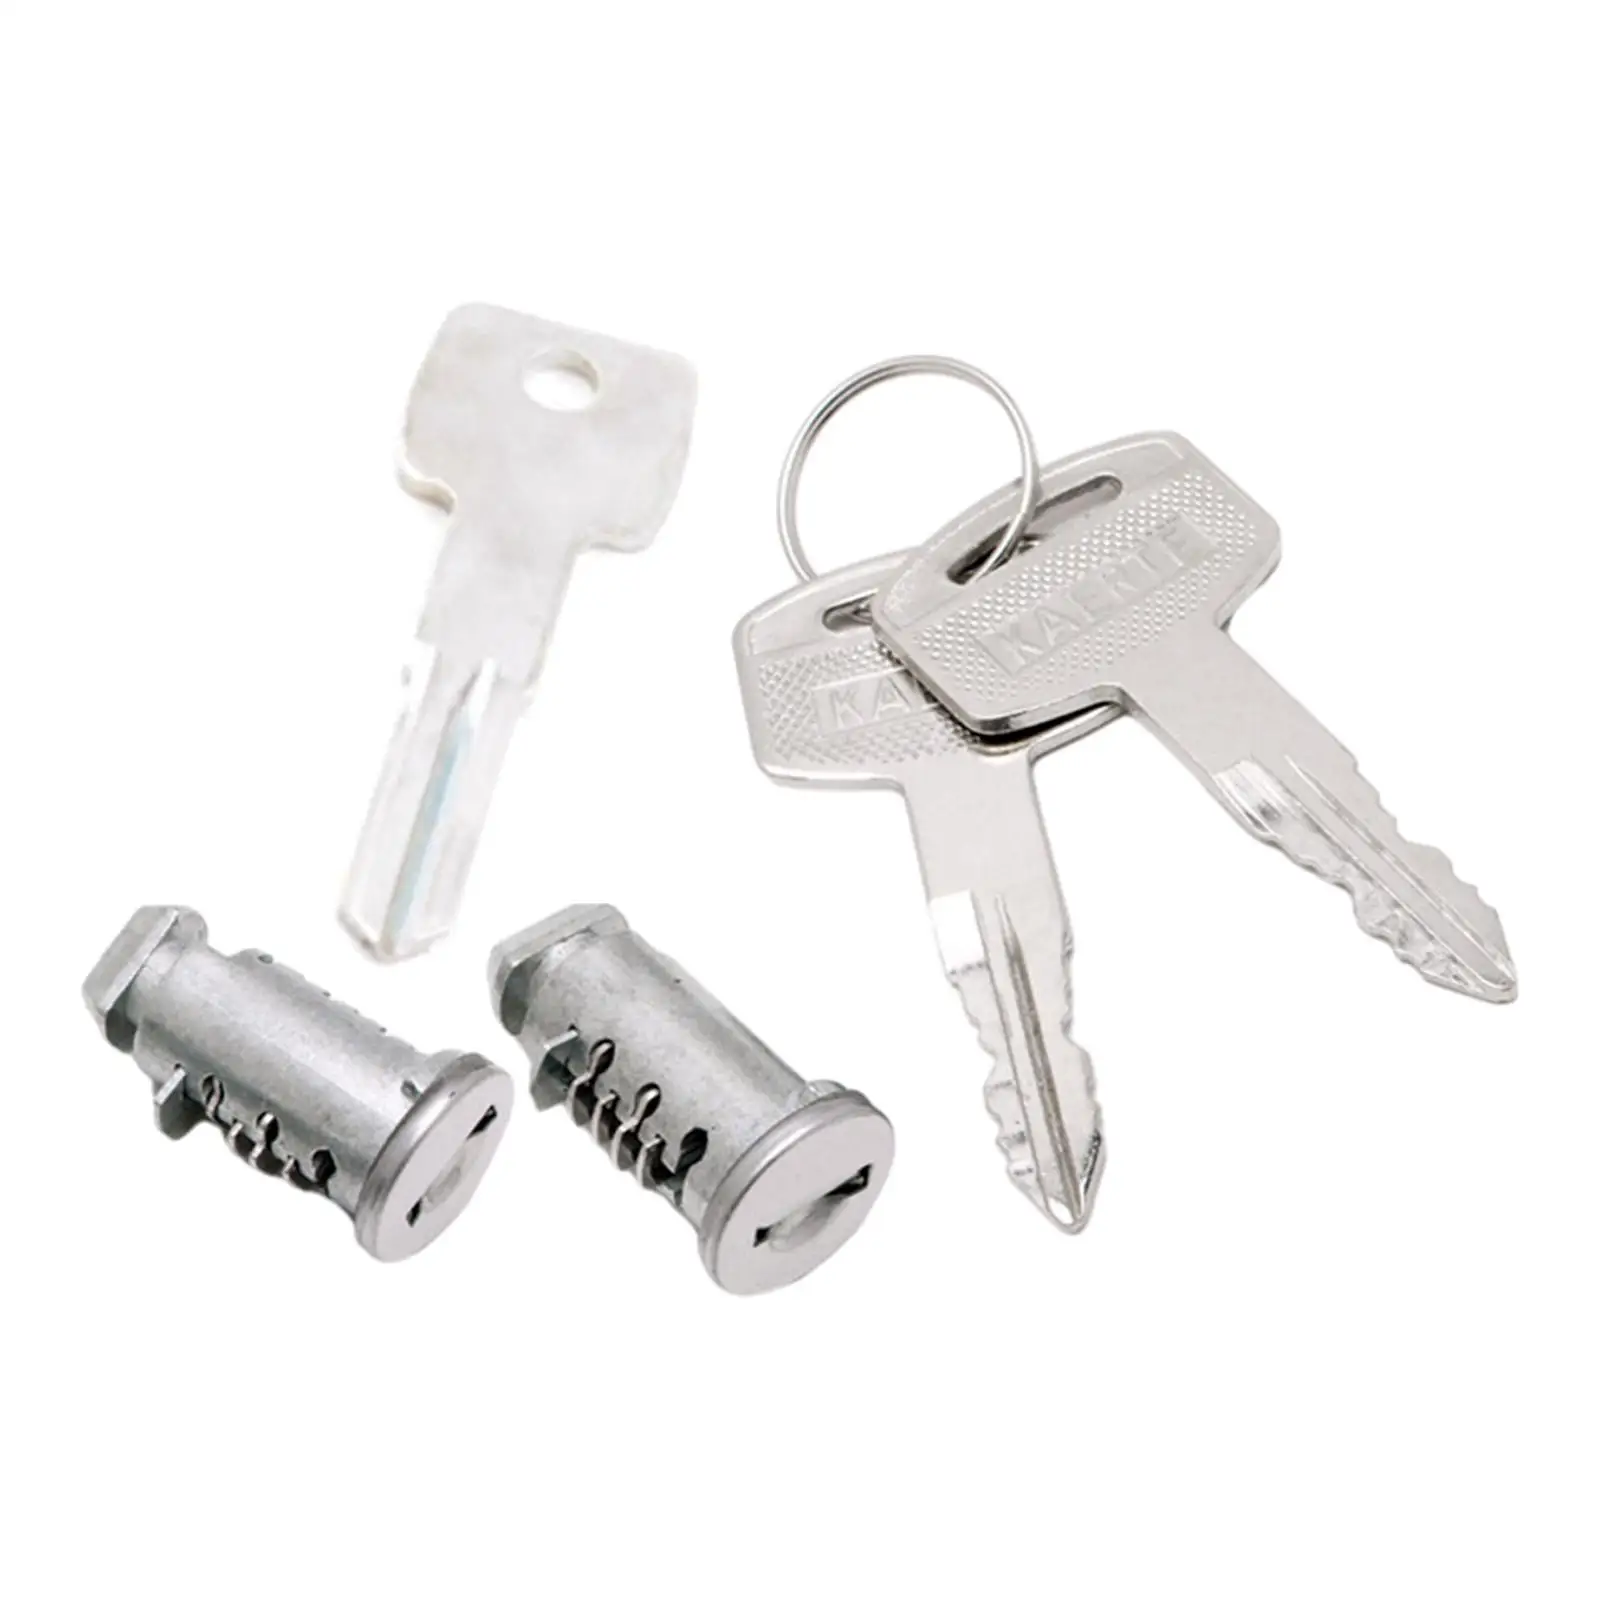 2 Pieces Lock Cylindes Cargo Bar Lock with Key for SUV Car Rack Locks